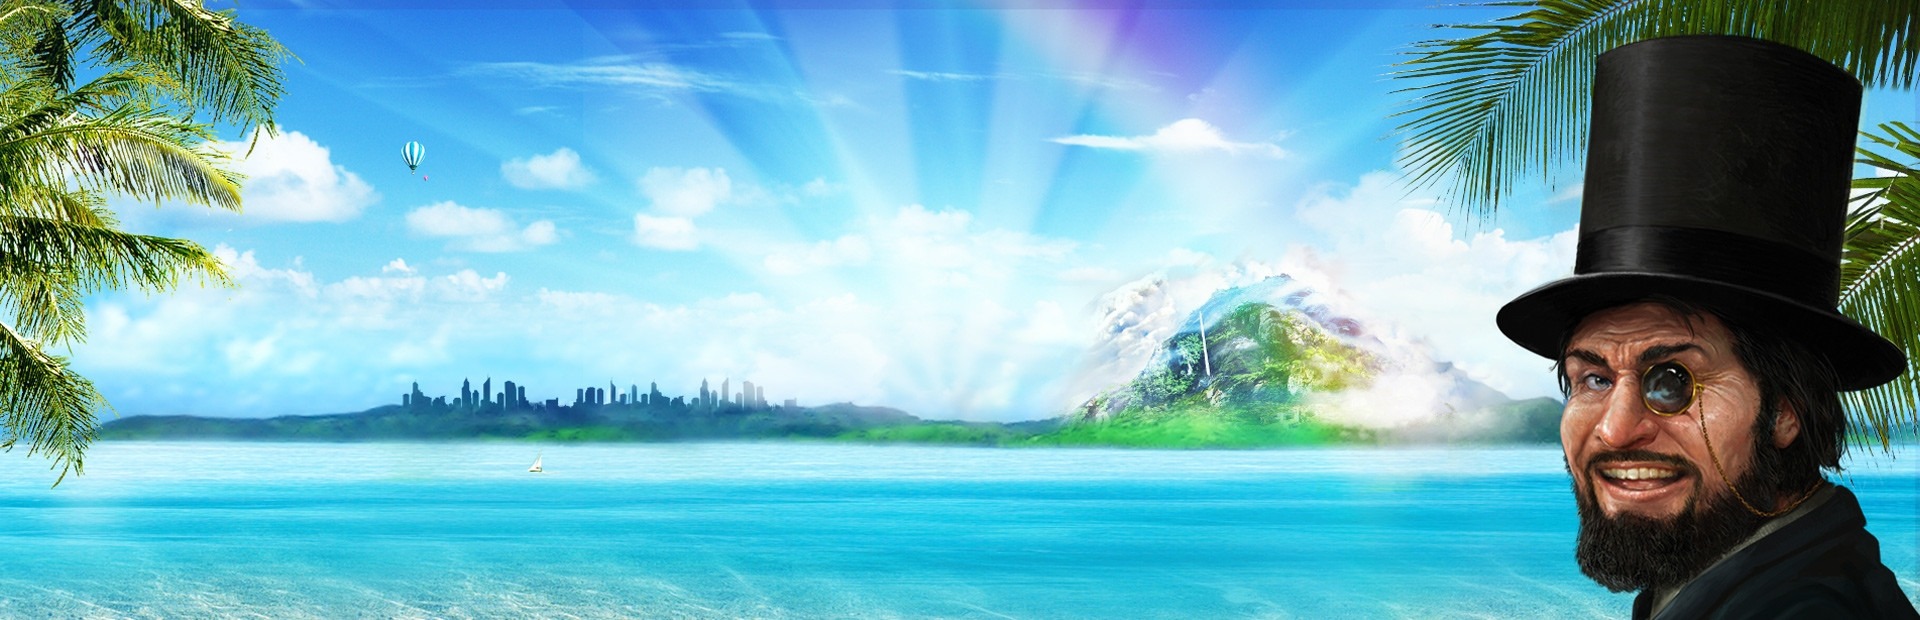 Banner Tropico 5 - Surfs Up!